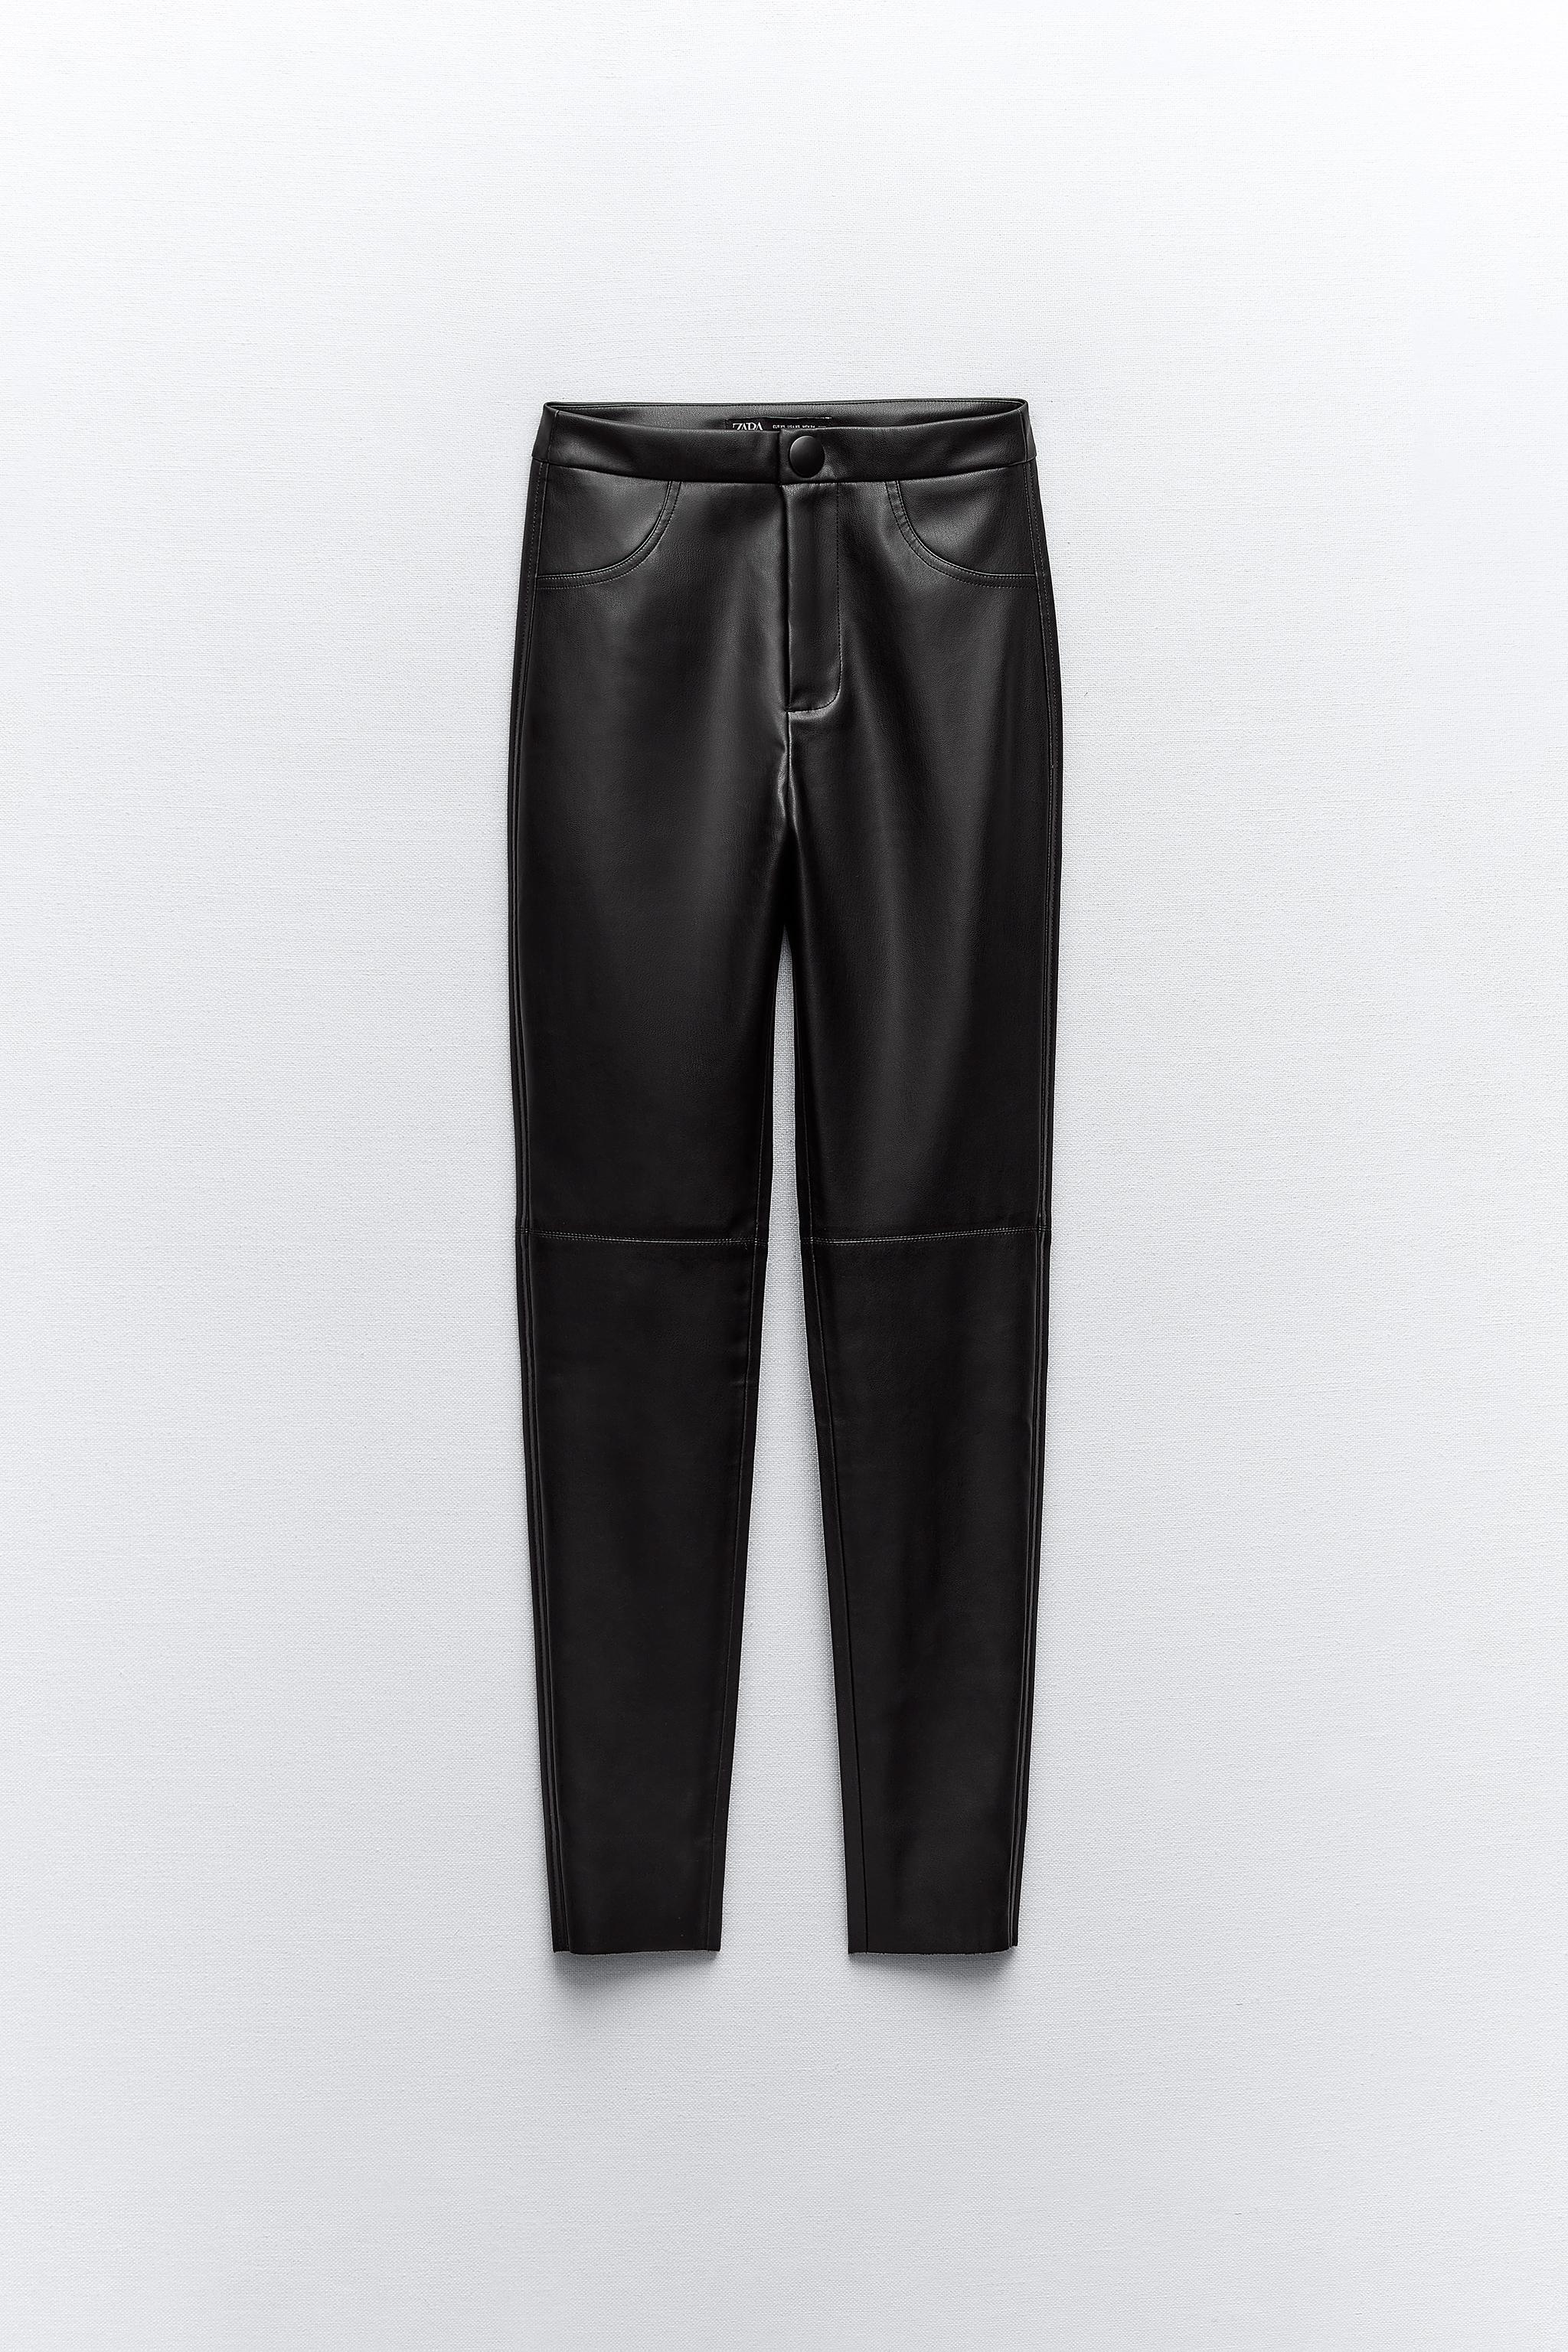 NWT ZARA BLACK Extra Long Faux Leather Leggings Pants Trousers Bloggers M  £34.99 - PicClick UK